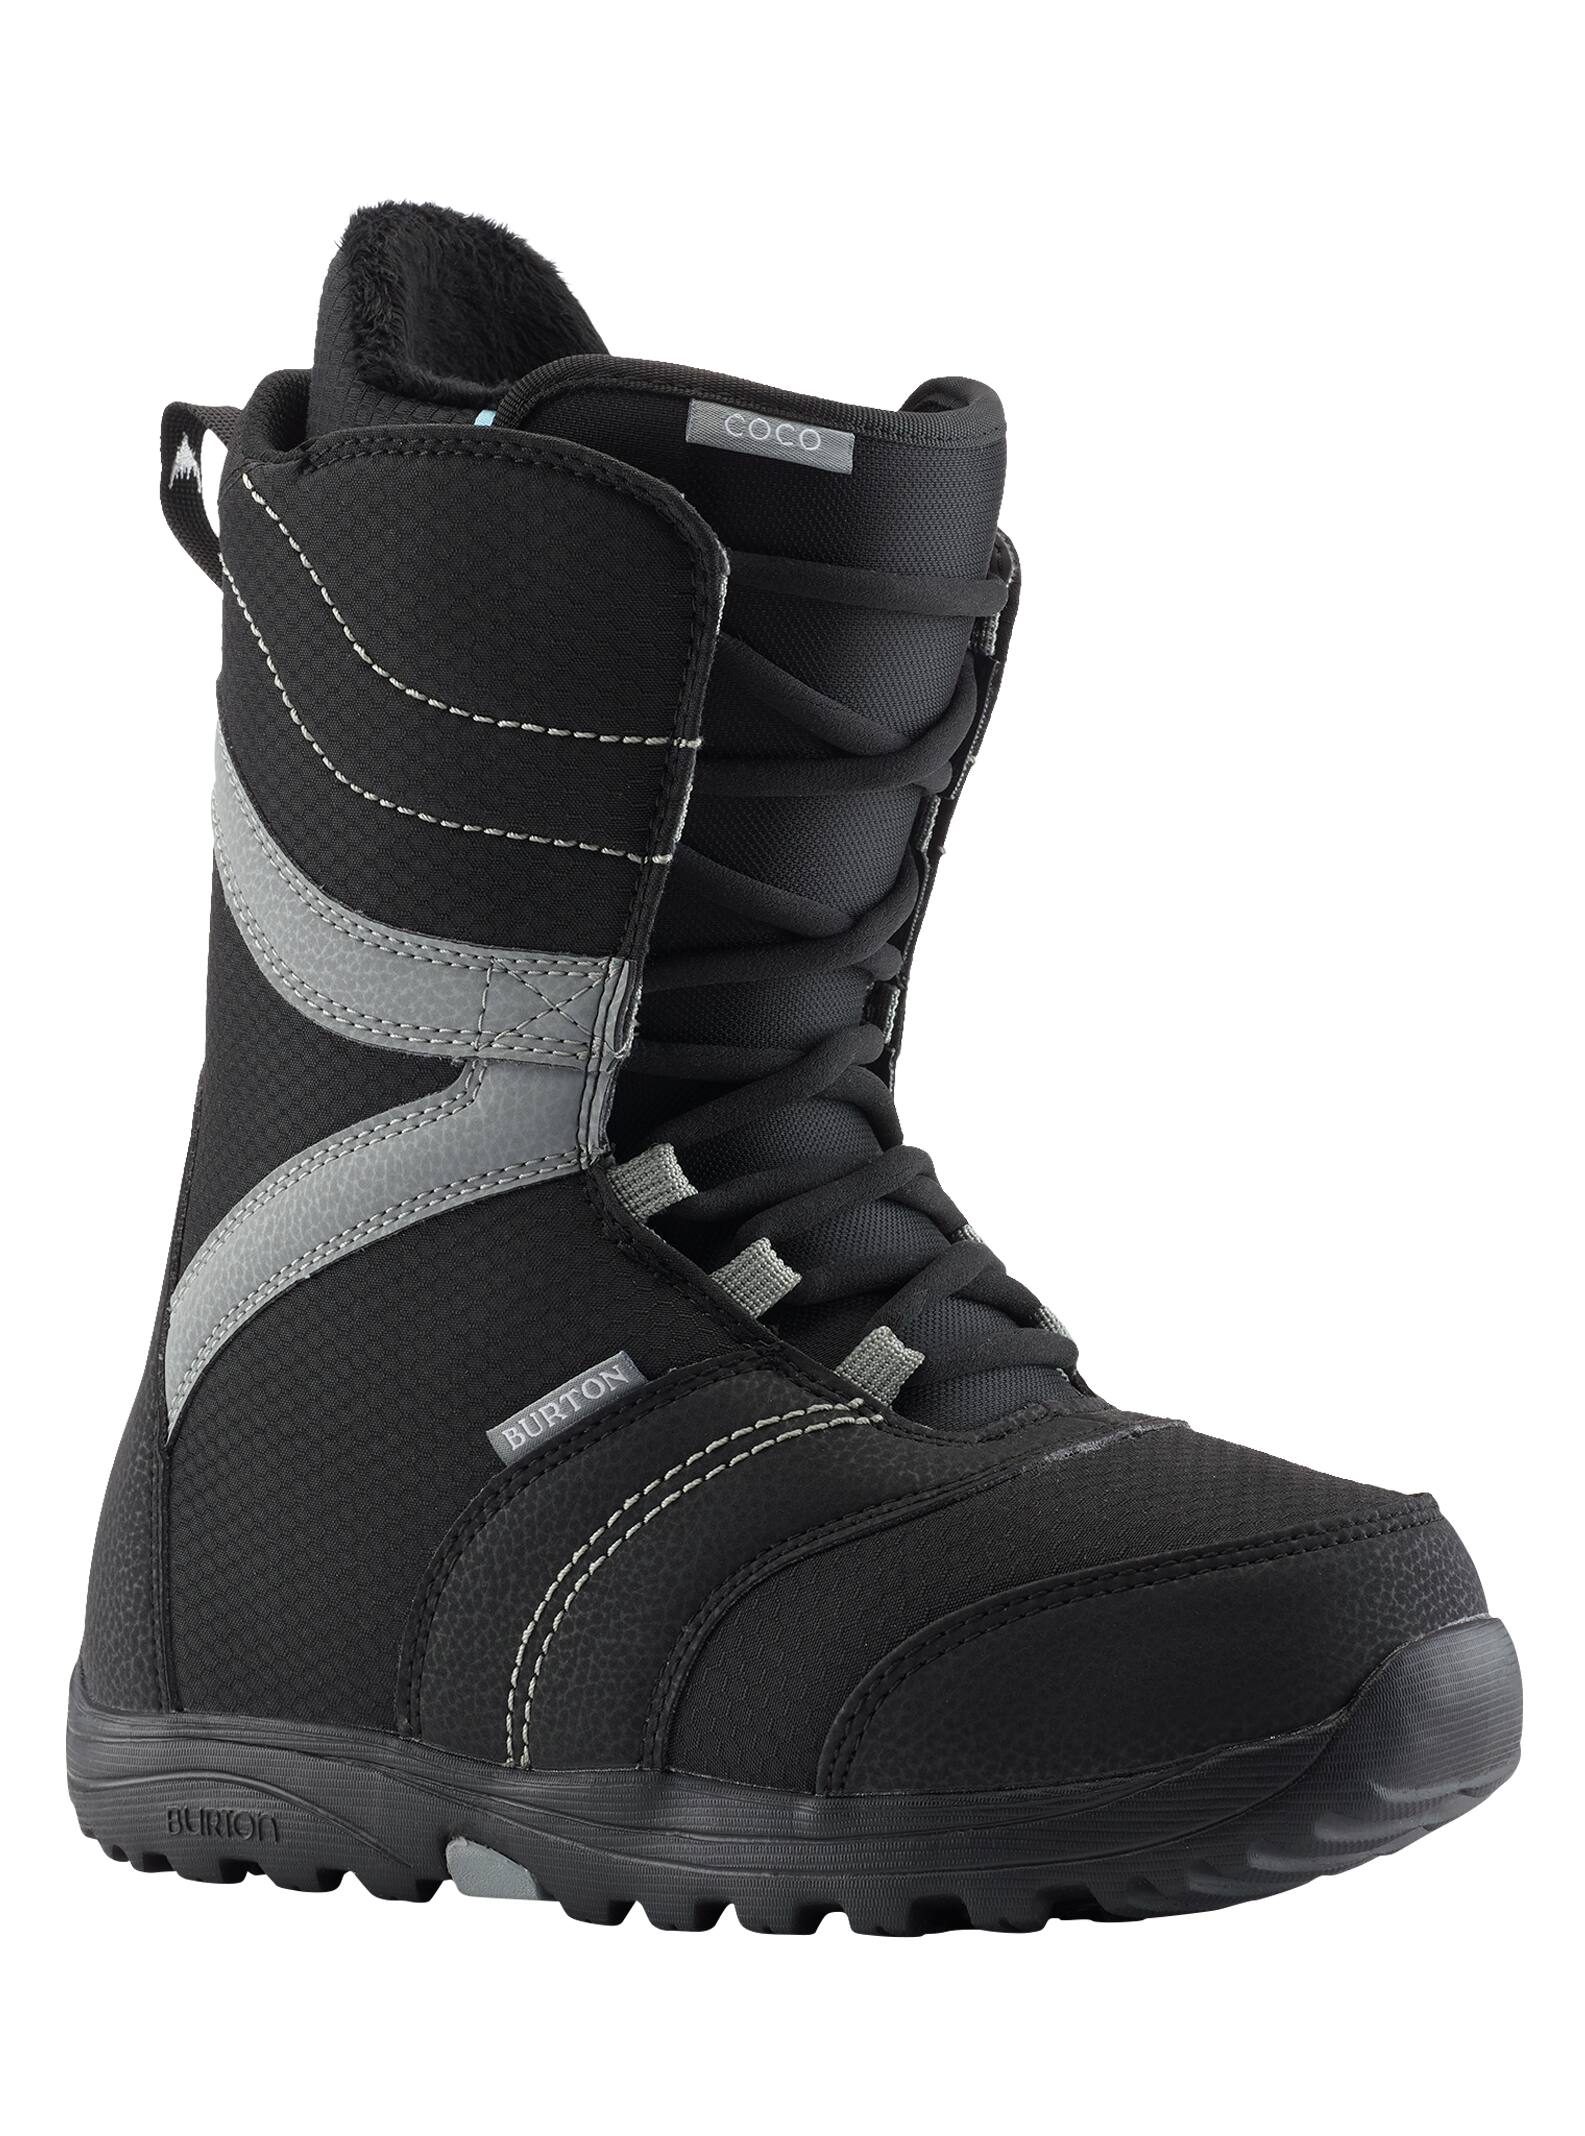 Burton - Boots de snowboard Coco femme, Black, 6.0